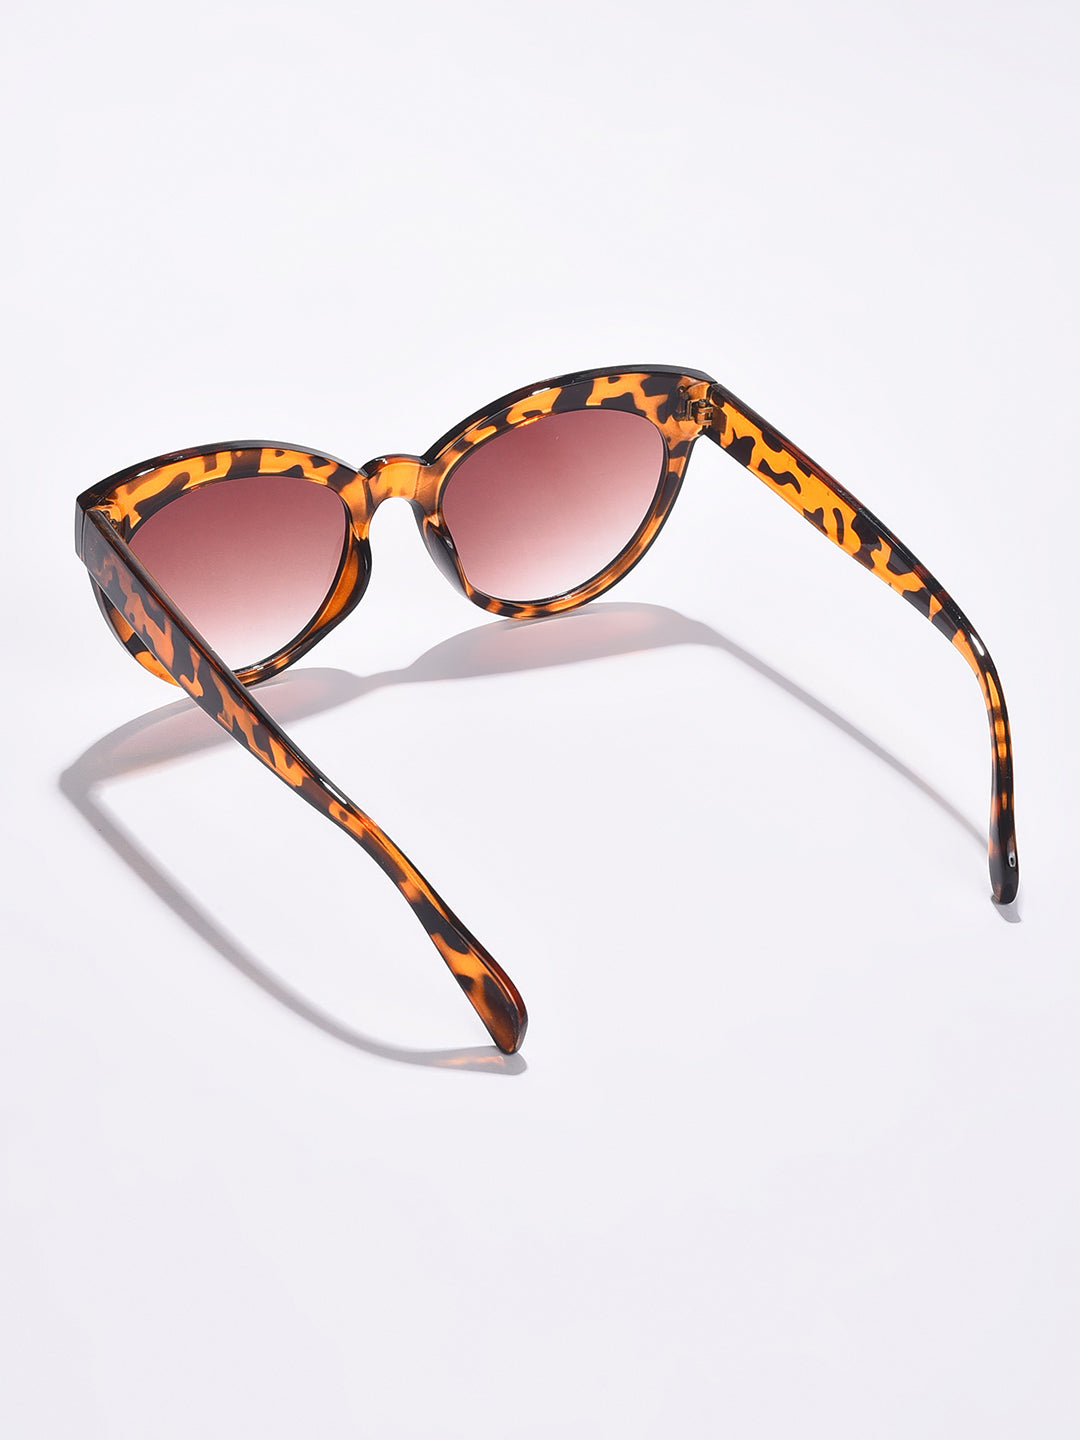 Black Lens Brown Cateye Sunglasses